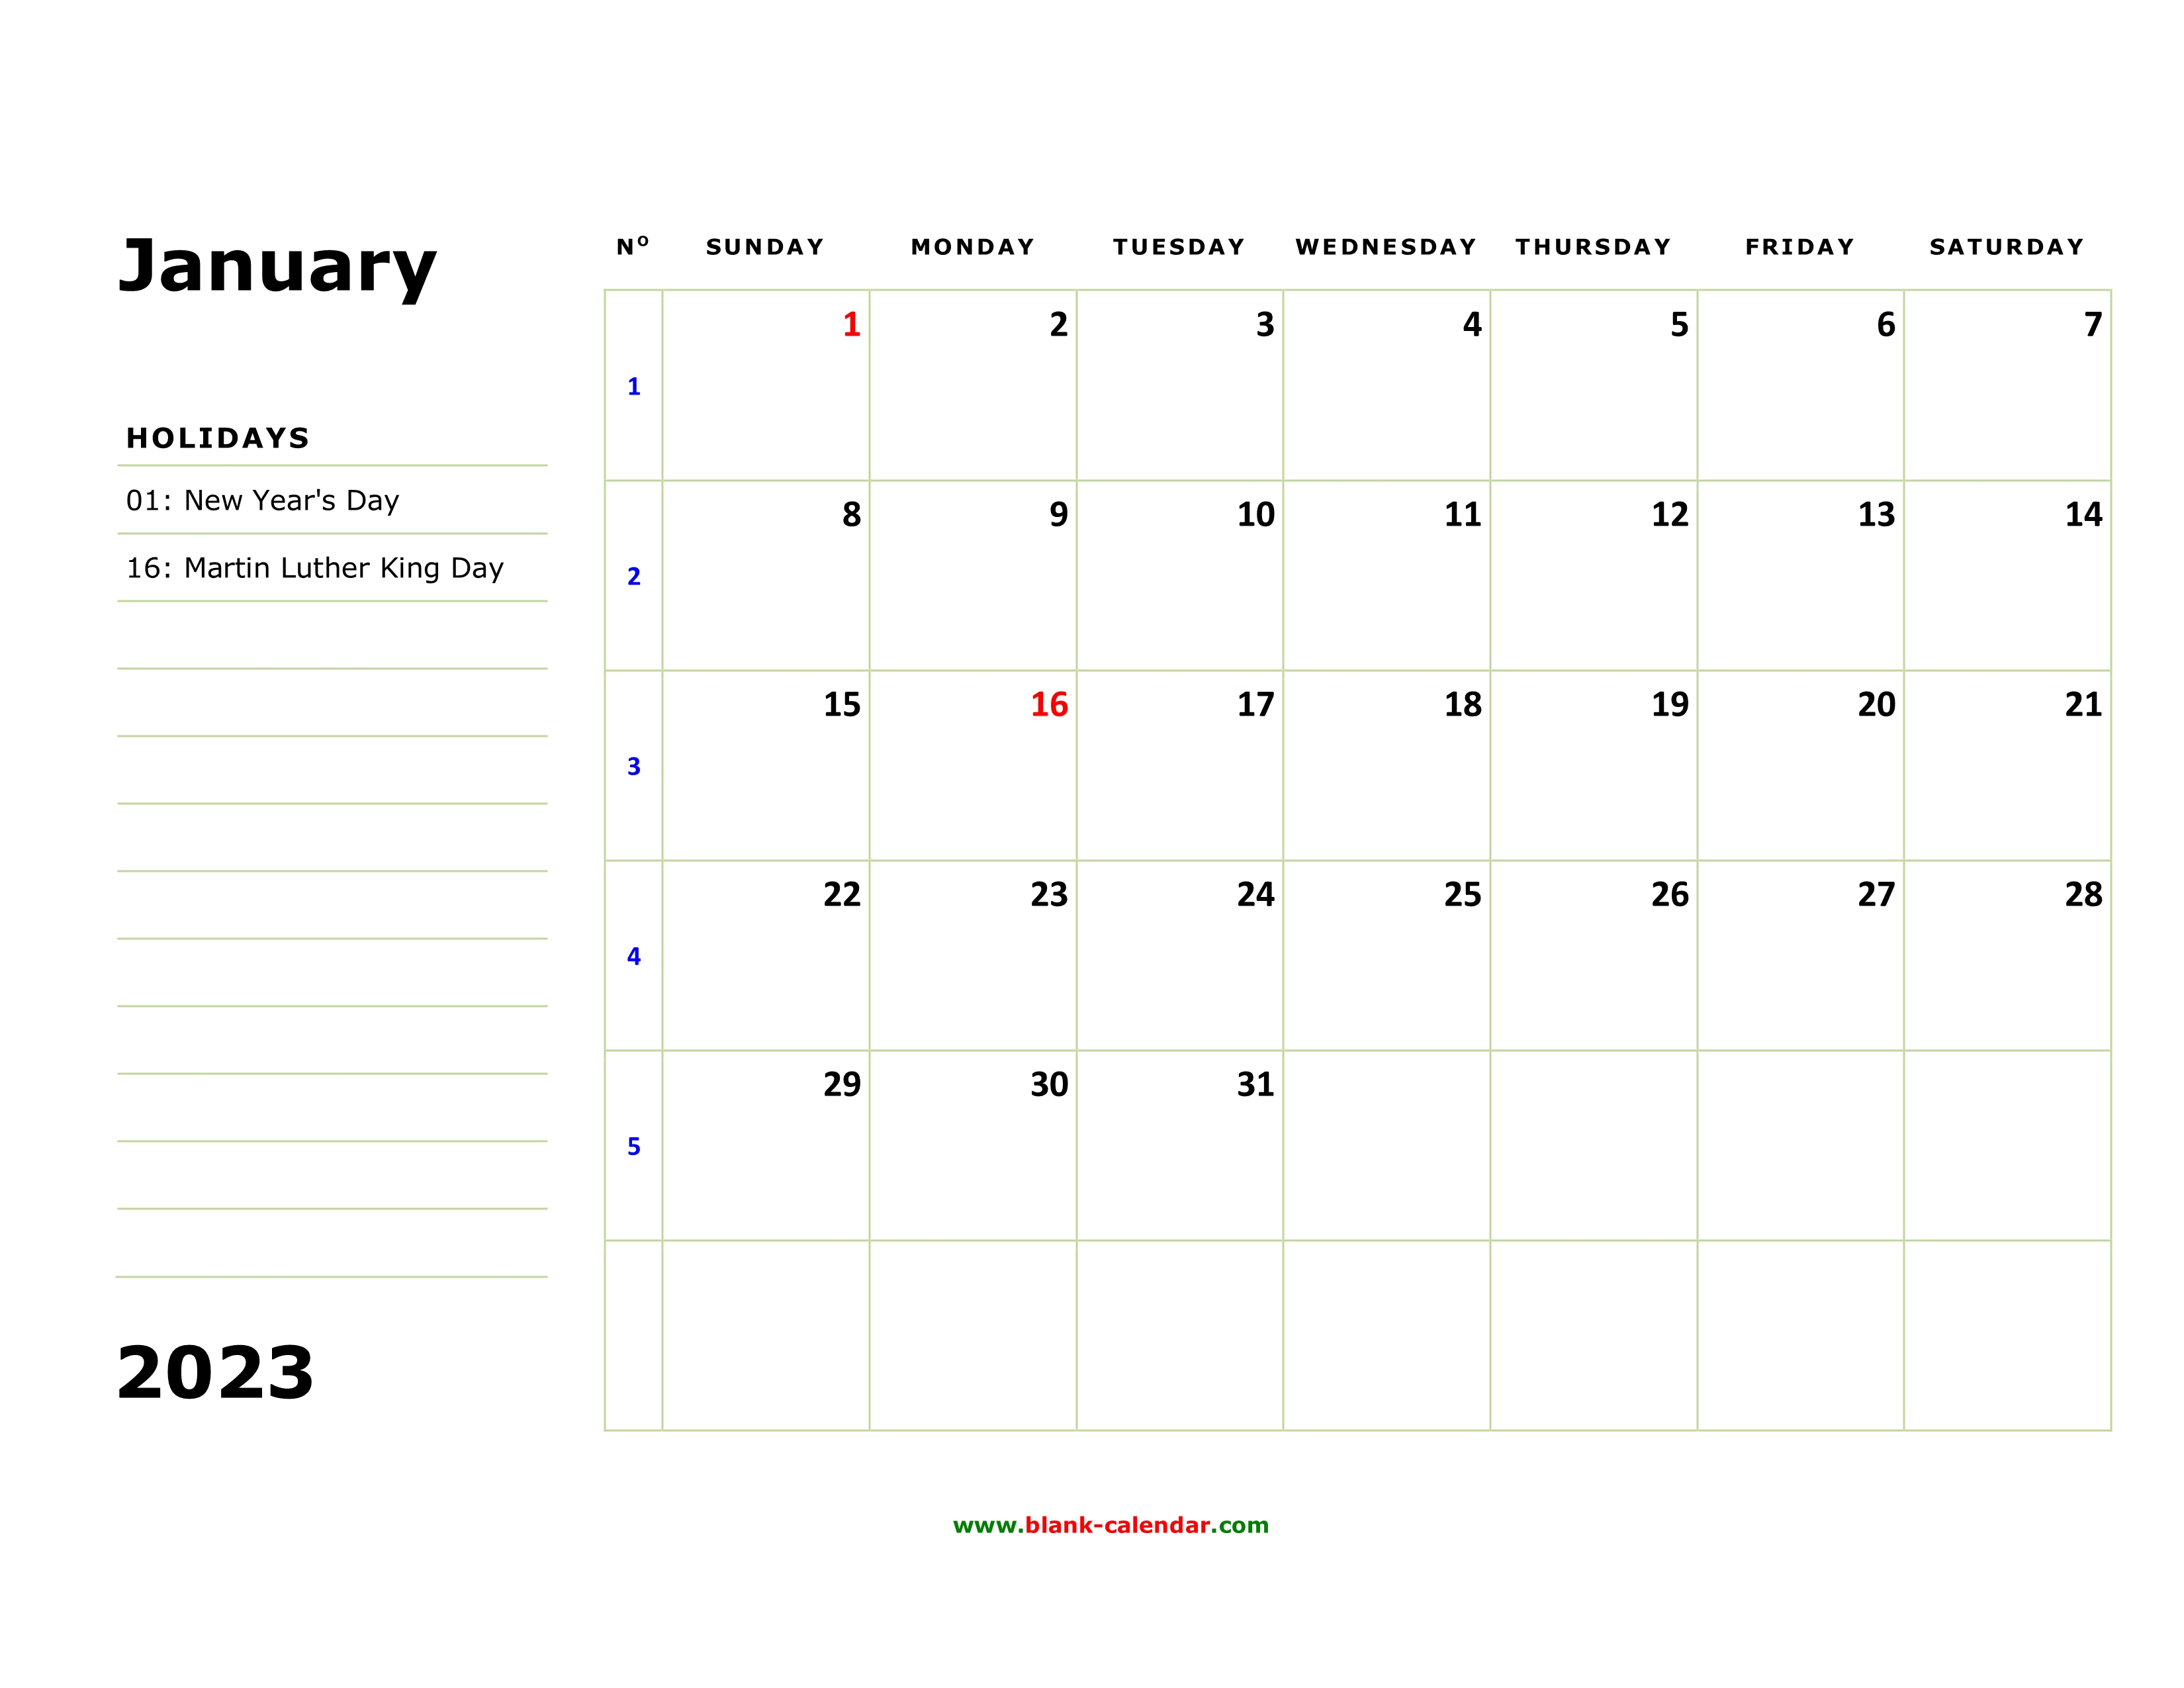 2023-calendar-templates-and-images-2023-calendar-2023-printable